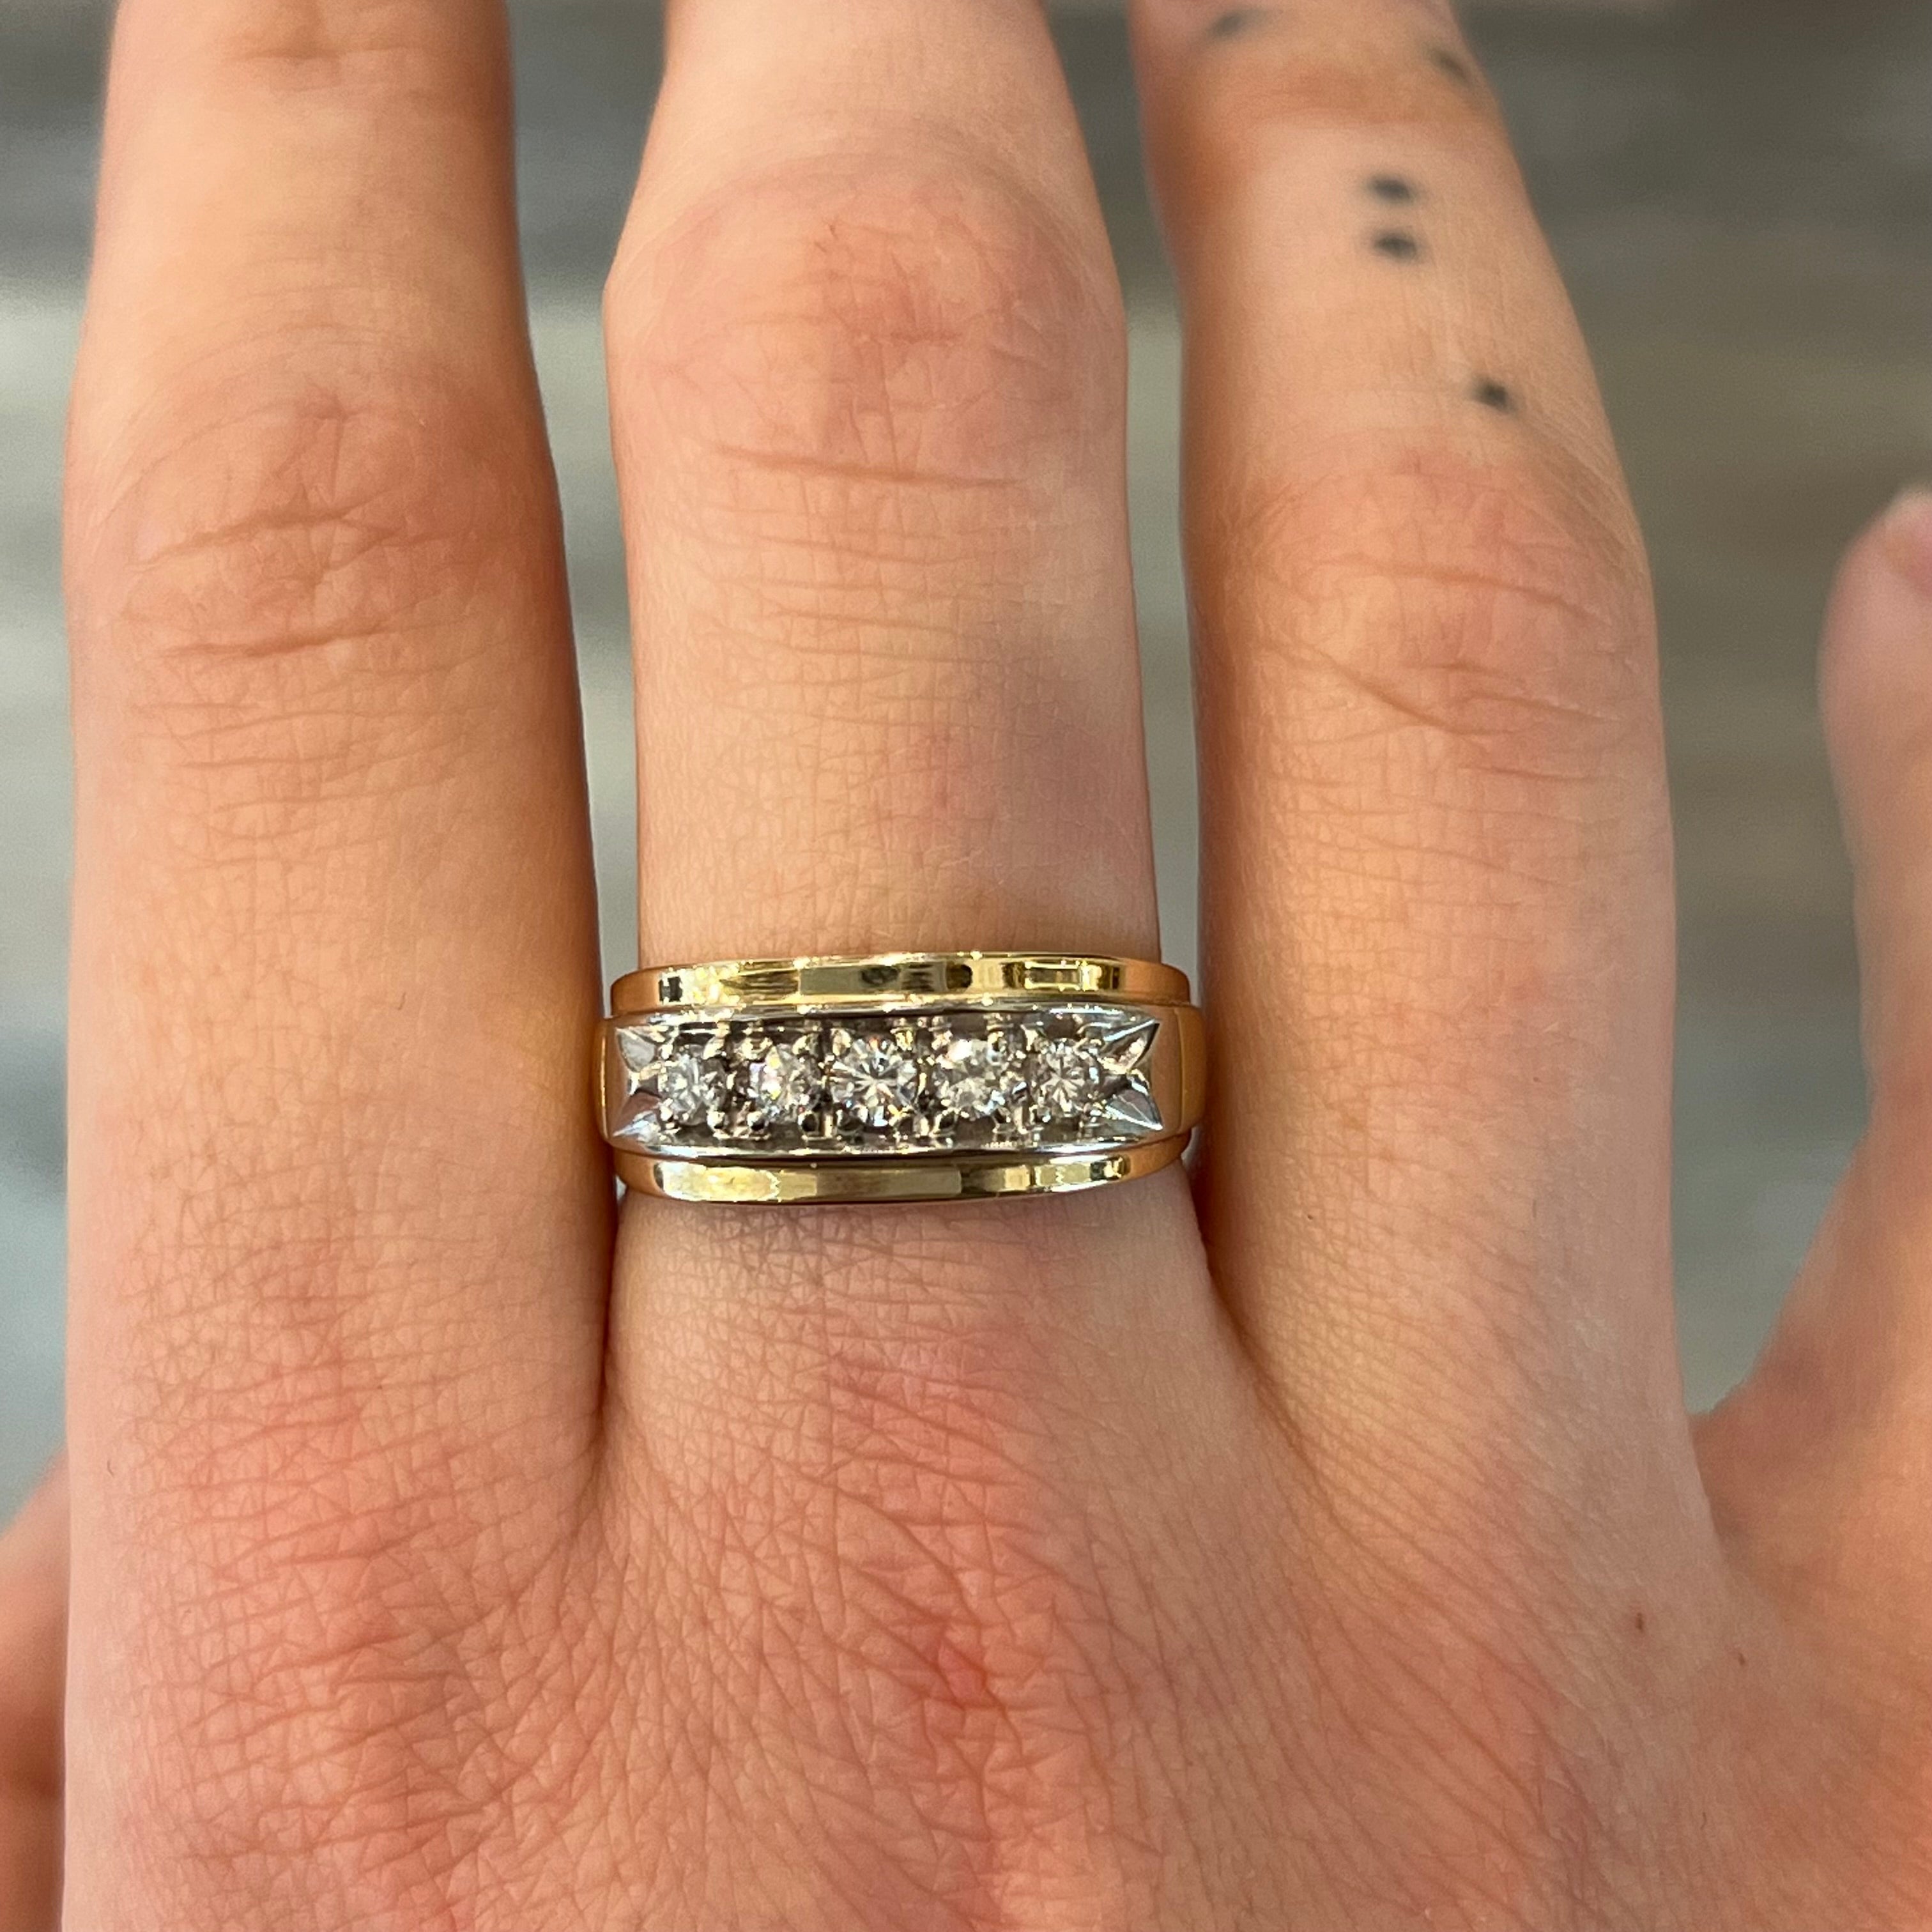 Buy 14KT Lavish Floral Rose Gold Diamond Ring Online – Ayaani